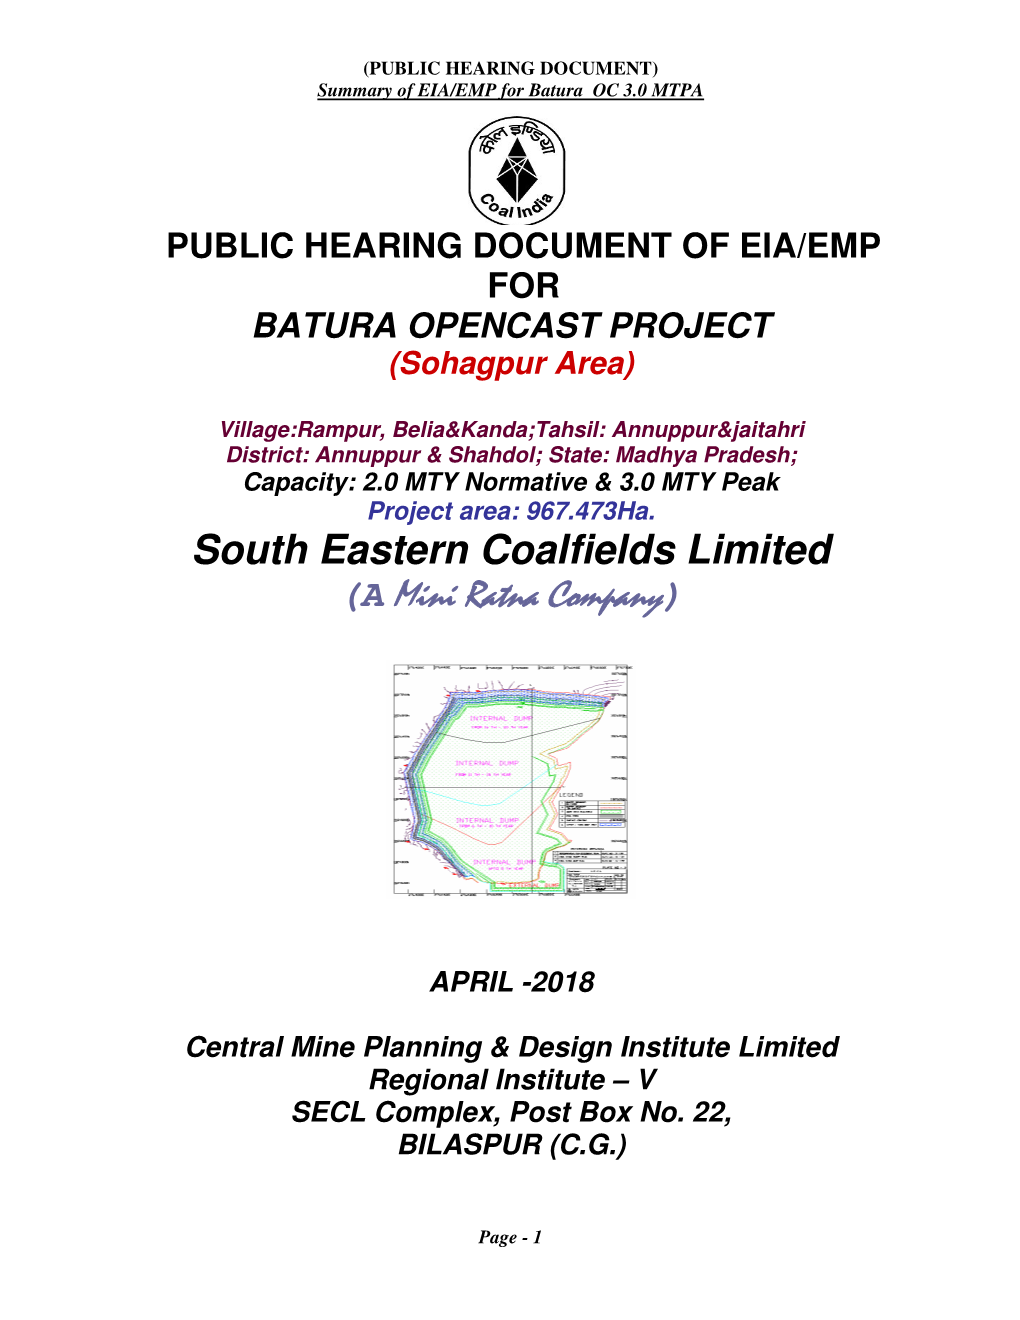 PUBLIC HEARING DOCUMENT of EIA/EMP for BATURA OPENCAST PROJECT (Sohagpur Area)